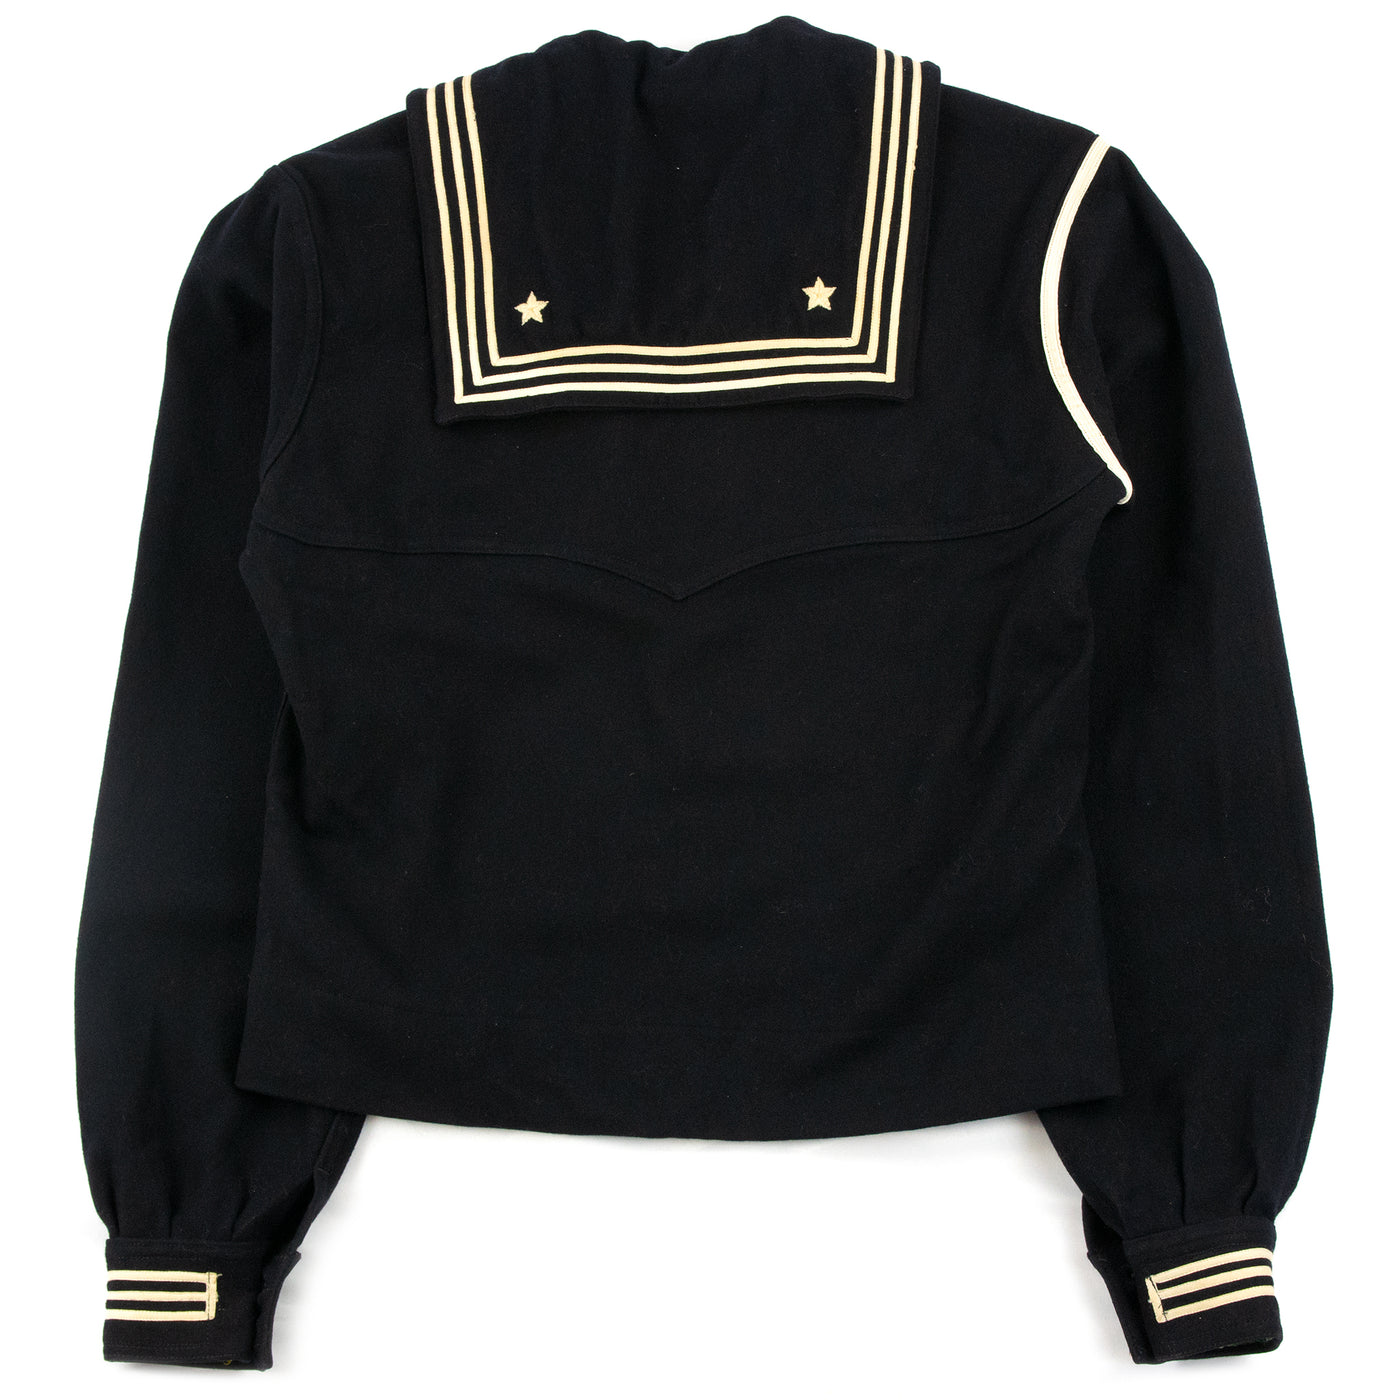 Vintage 1940s WW2 Era US Navy Cracker Jack Military Wool Shirt - XS Back